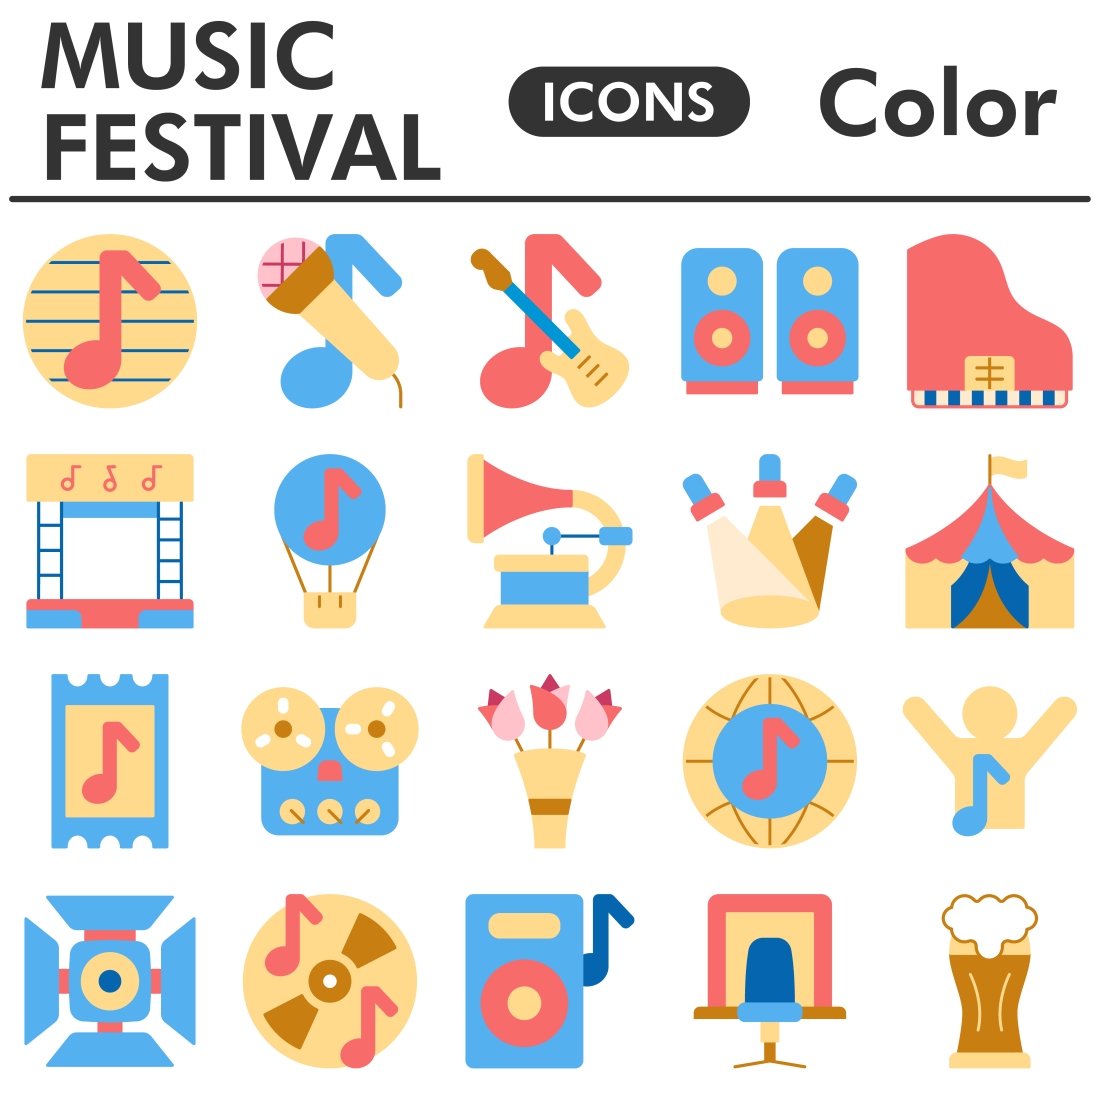 Muzic festival icons set, color style cover image.